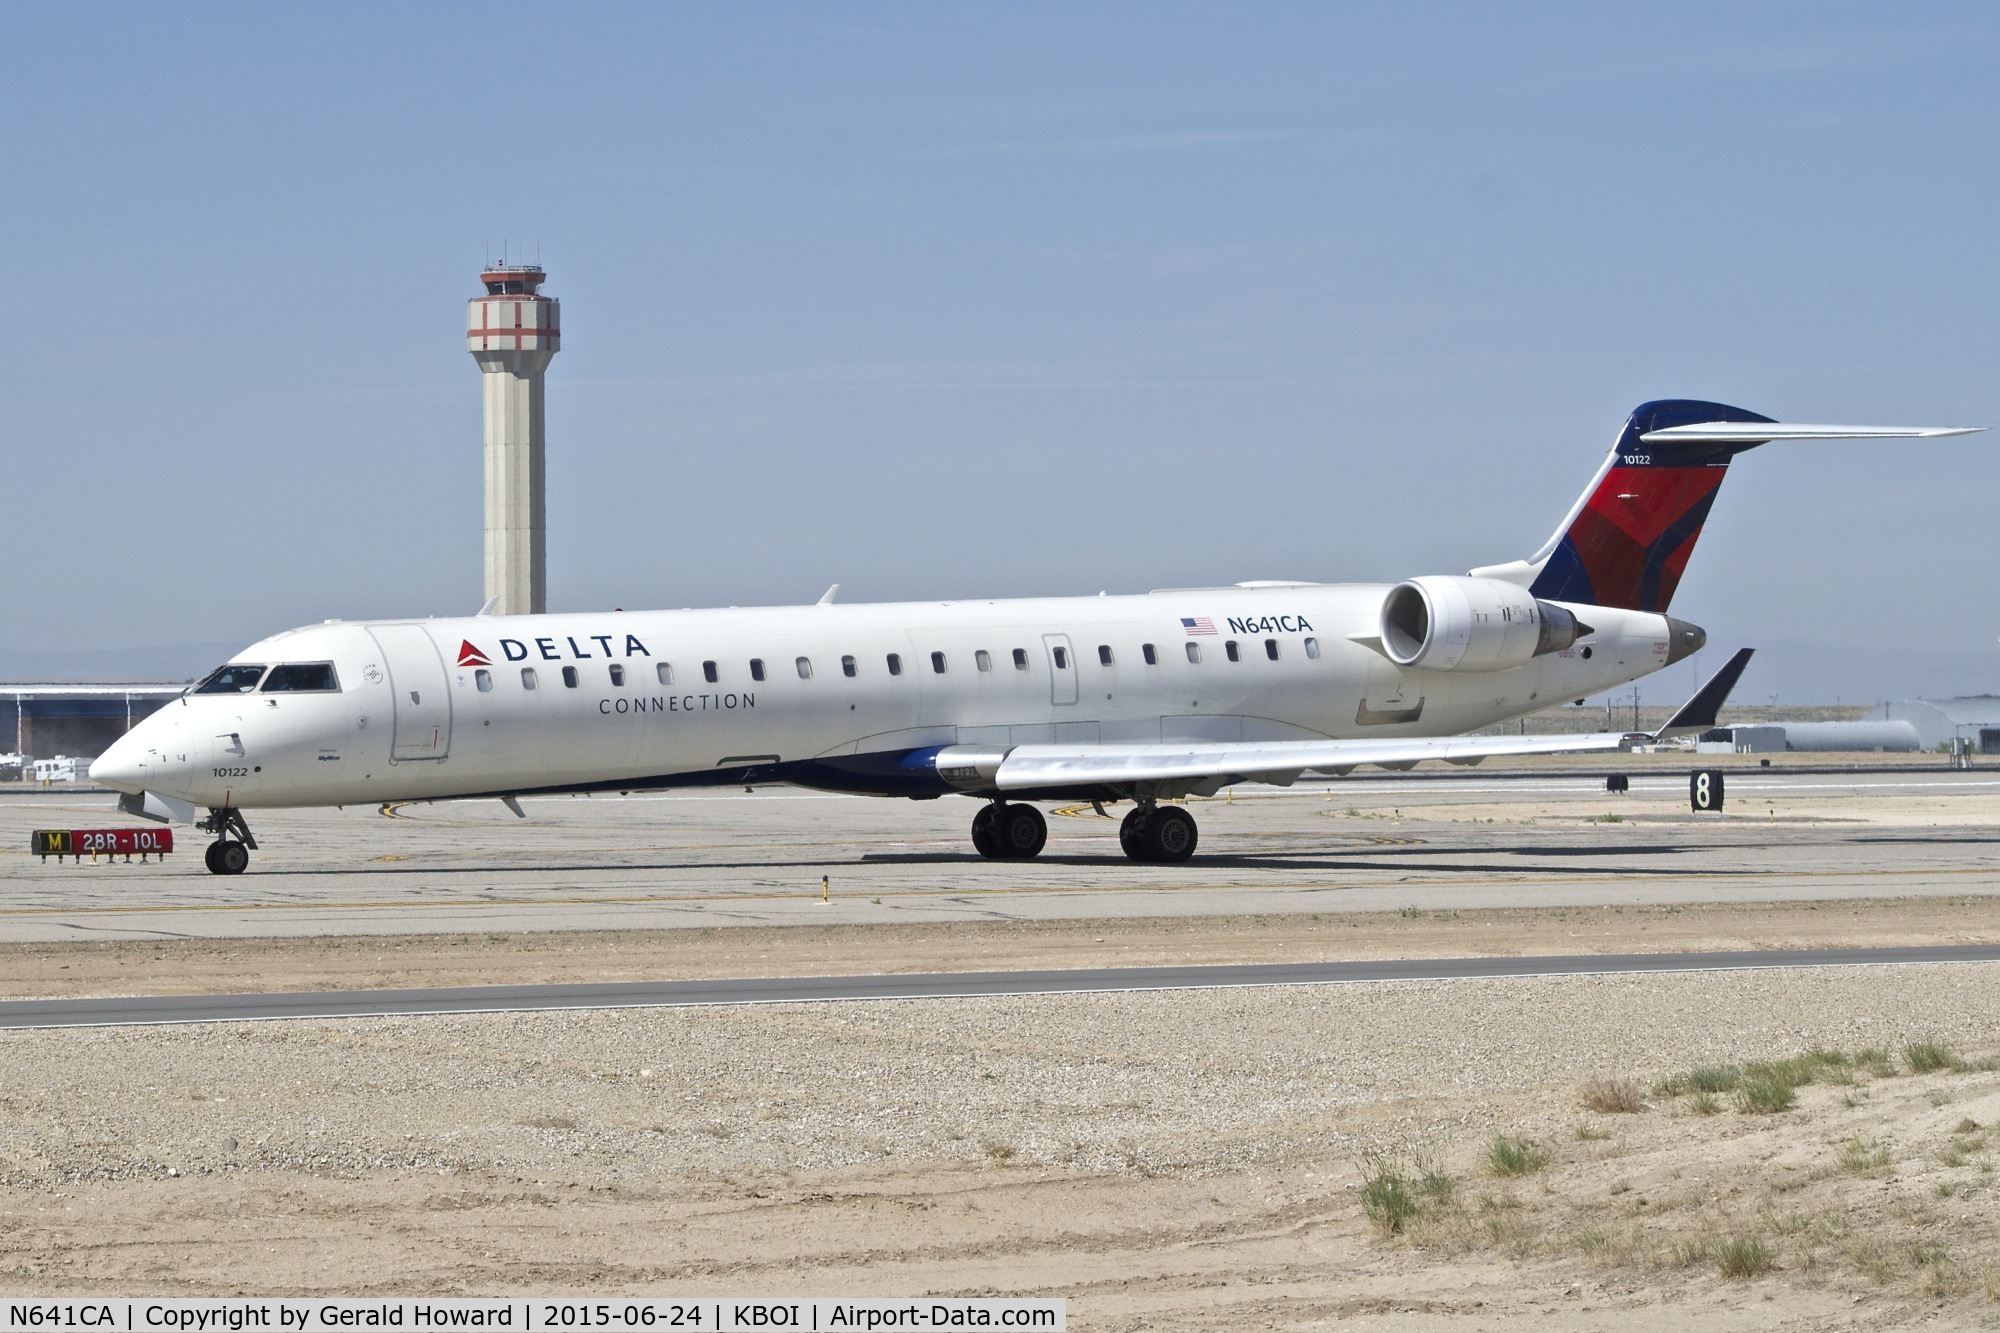 N641CA, 2003 Bombardier CRJ-700 (CL-600-2C10) Regional Jet C/N 10122, Taxiing on Alpha for RWY 28R.